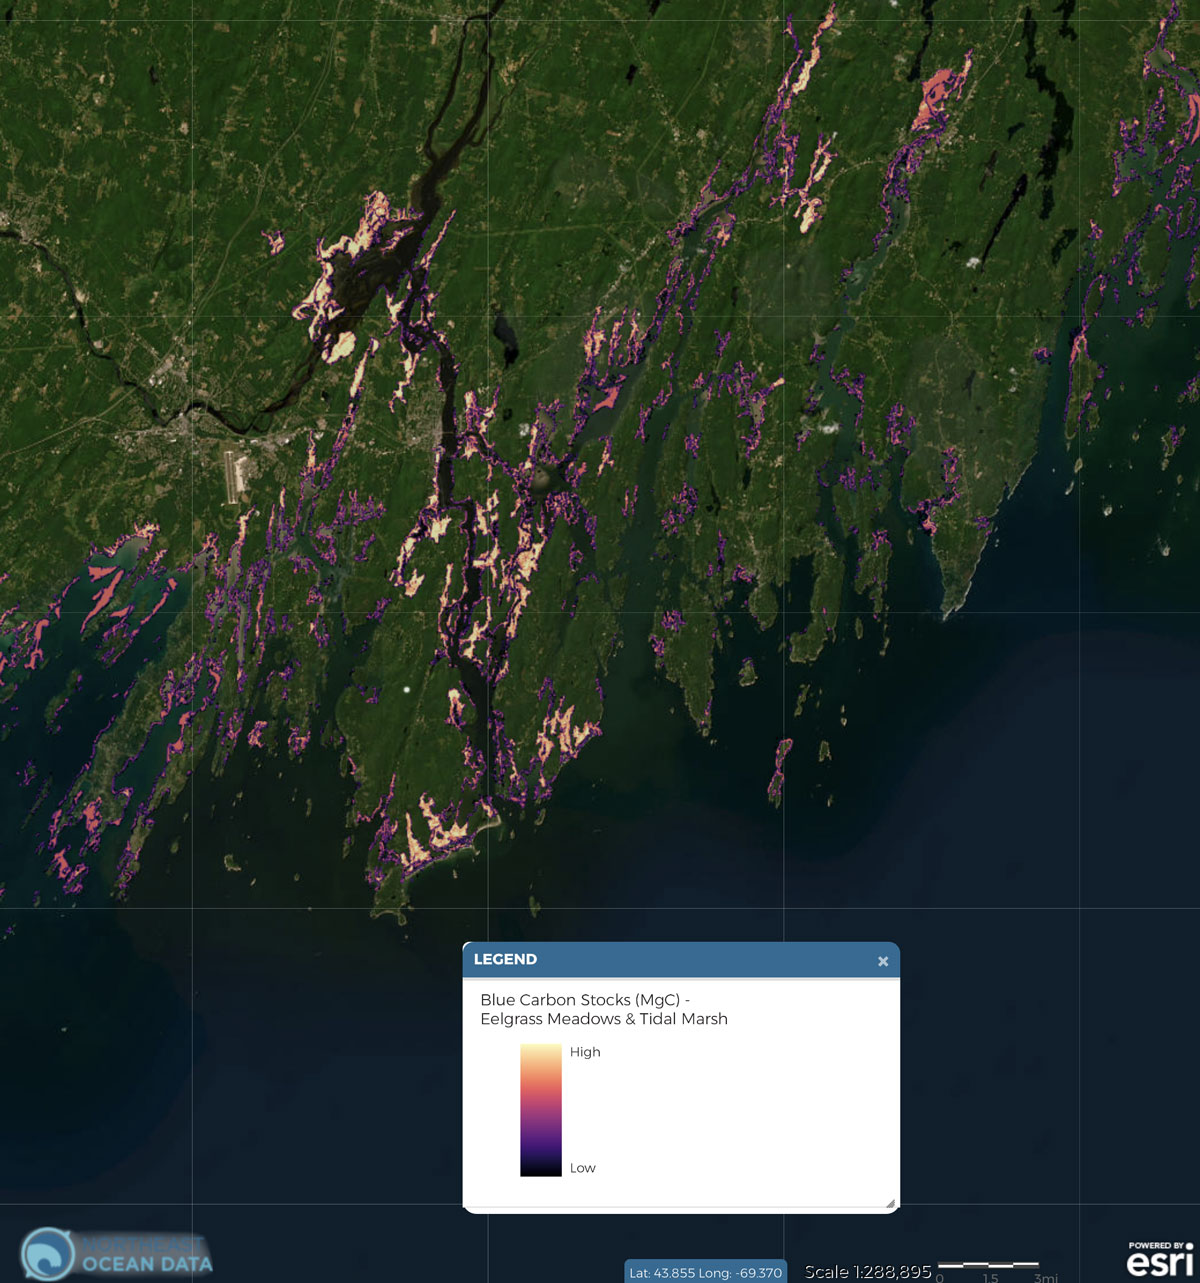 Screenshot of Data Explorer interactive map